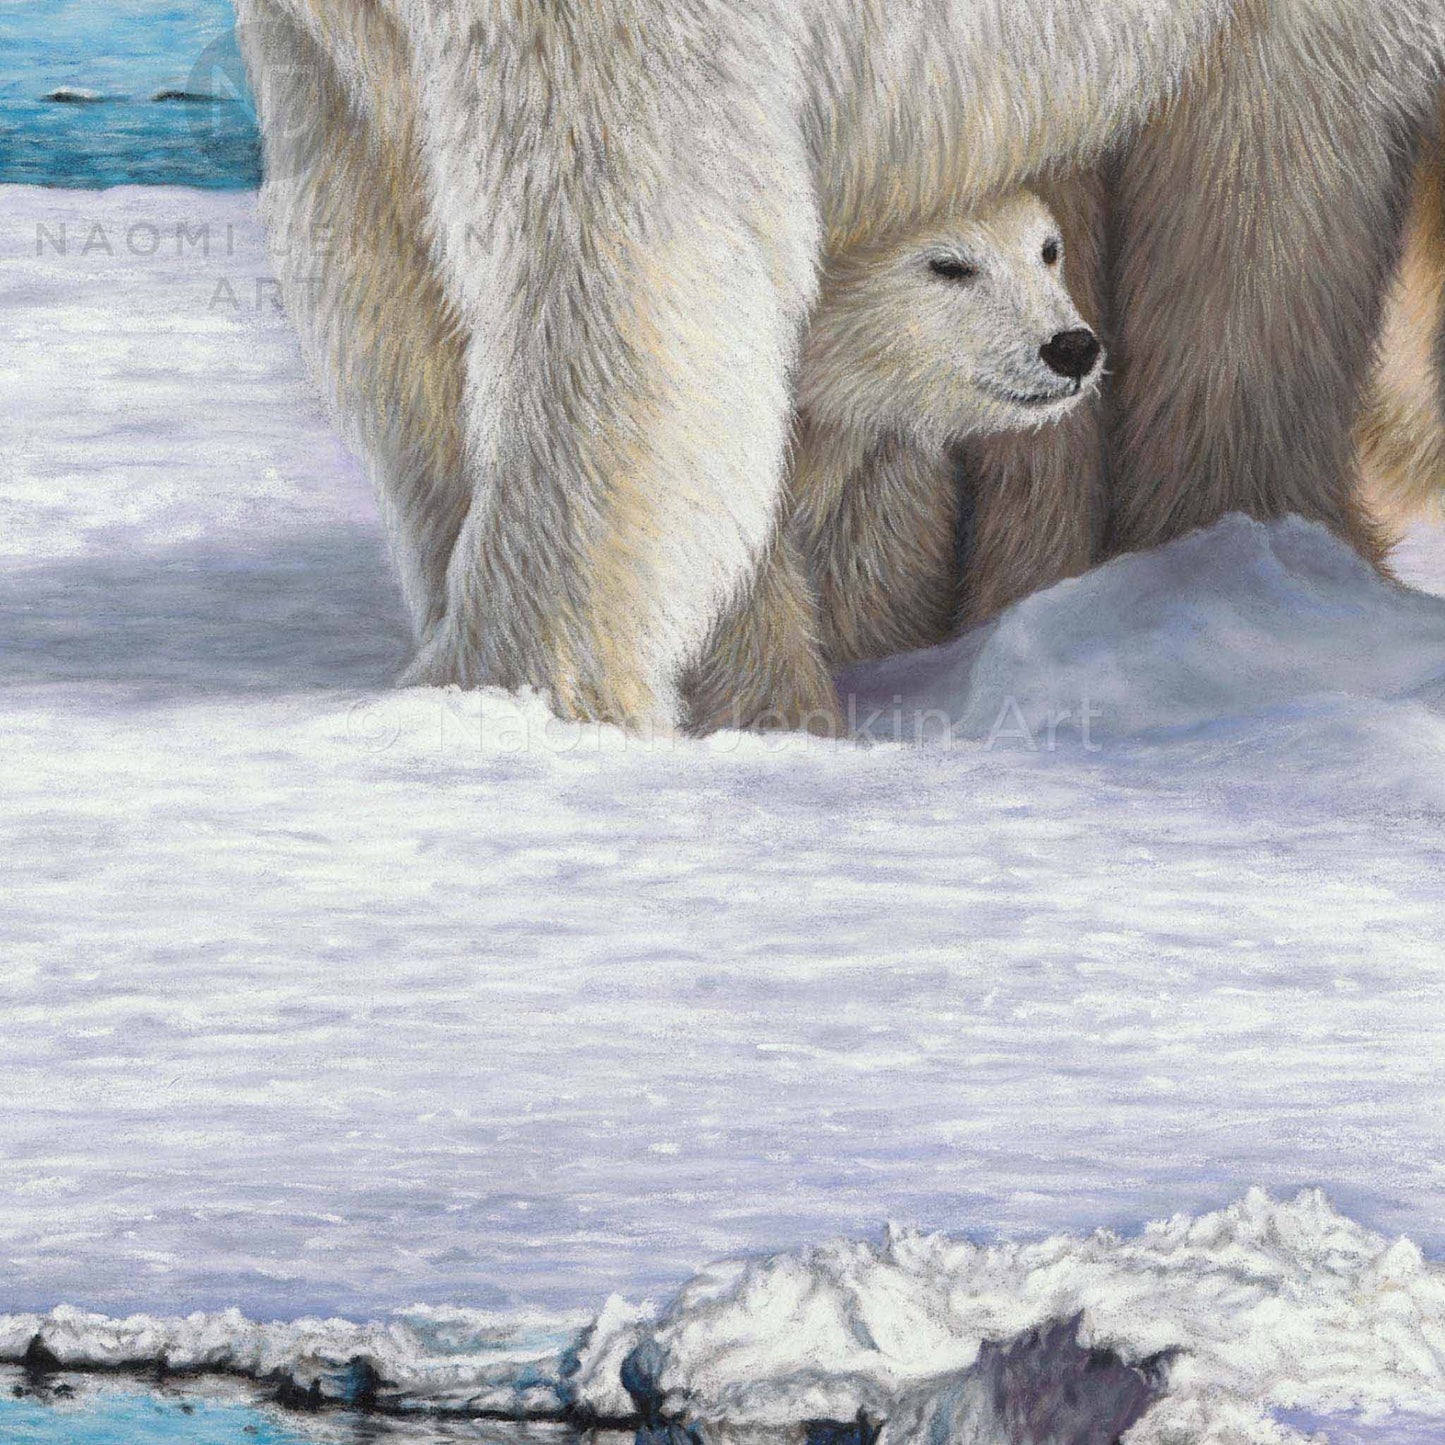 Close up of a polar bear cub from the print 'On Thin Ice' by wildlife artist Naomi Jenkin